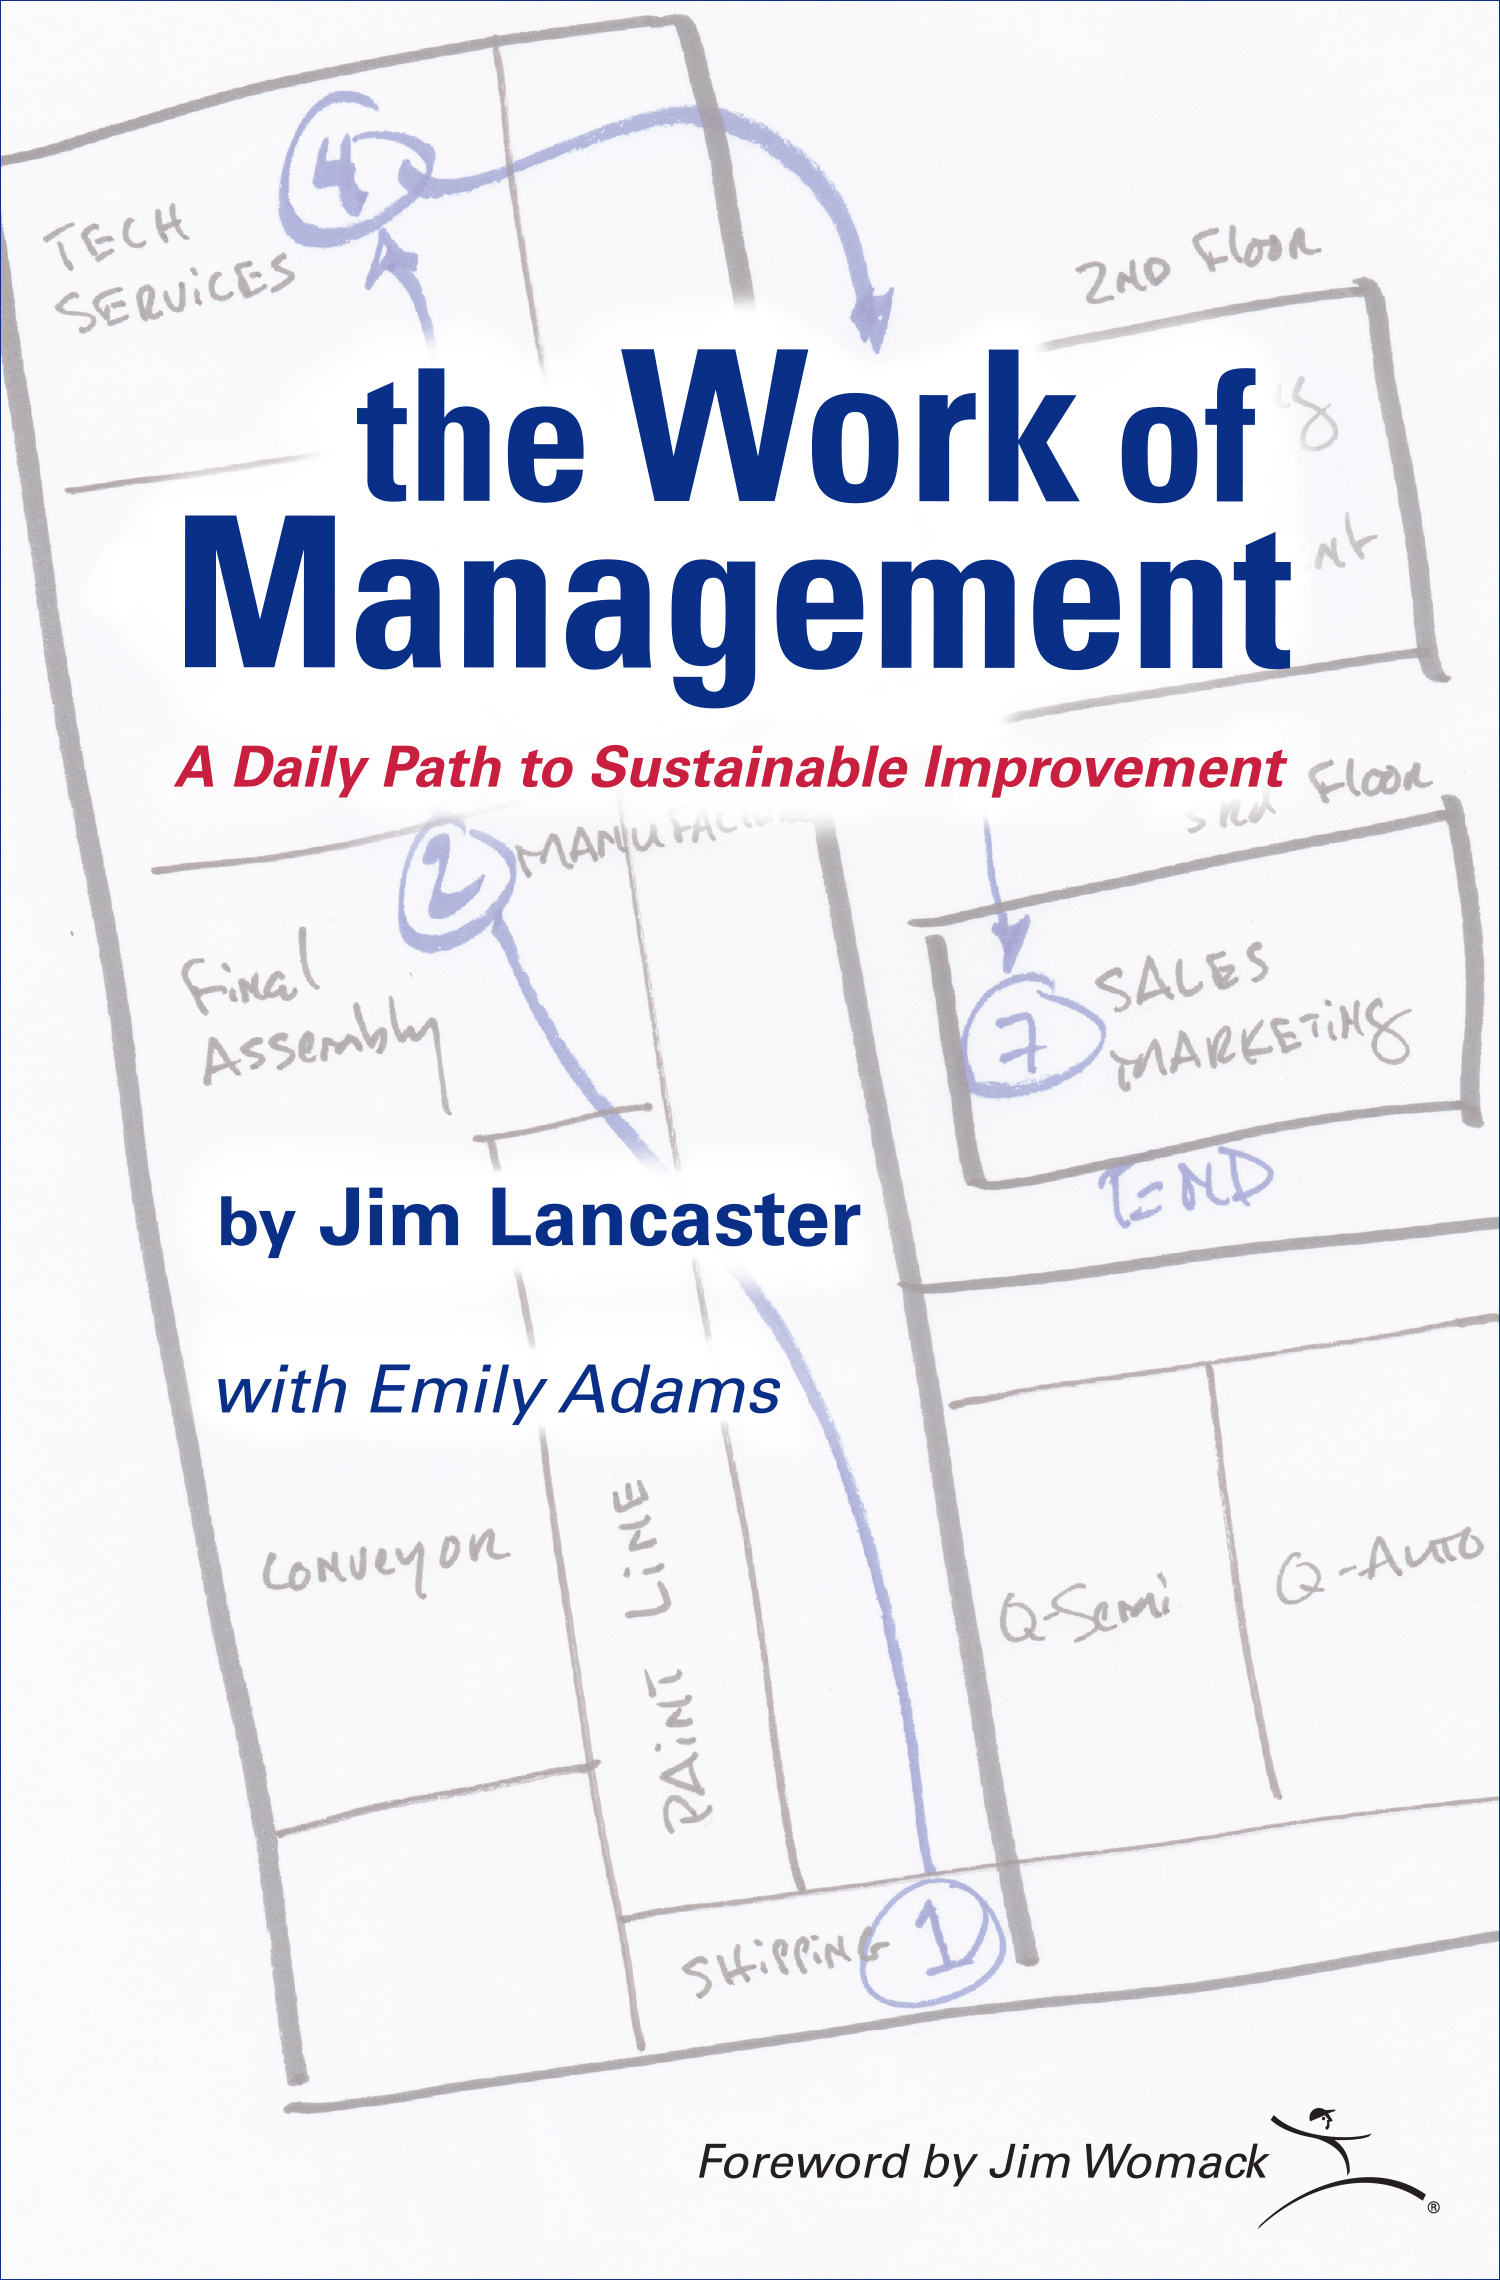 "Work of Management"